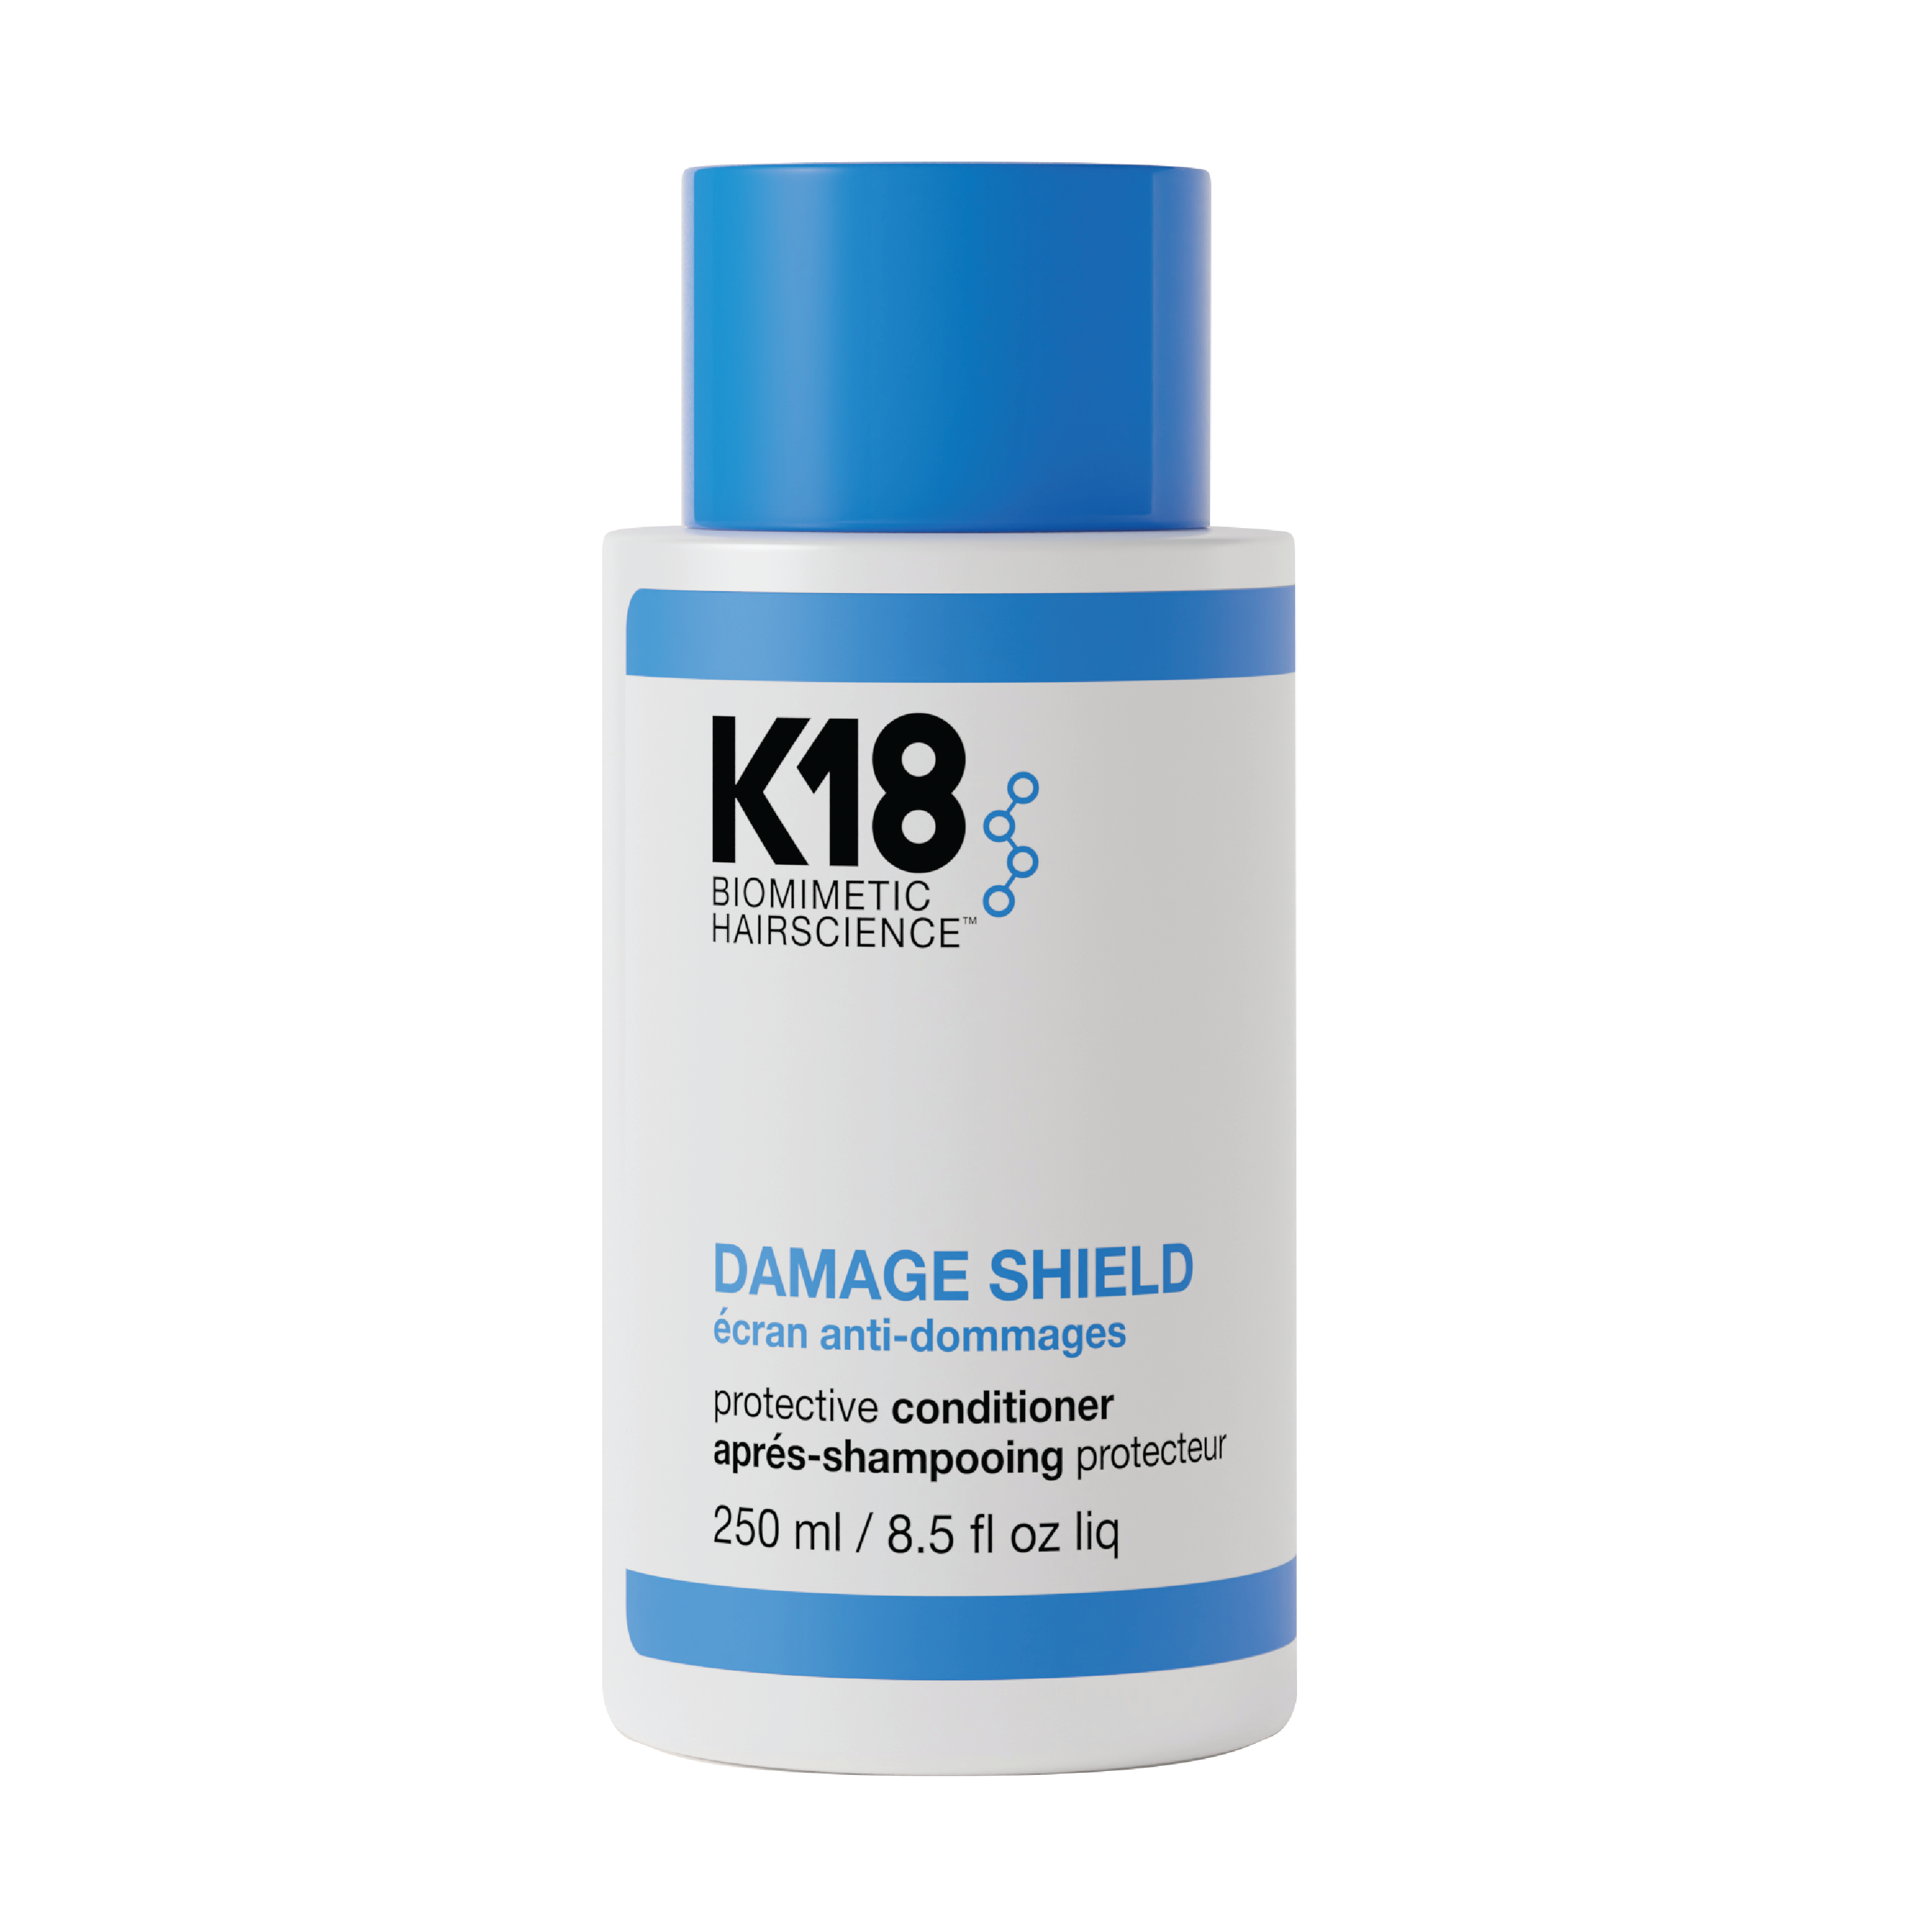 K18 Damage Shield Protective Conditioner, 250 ml